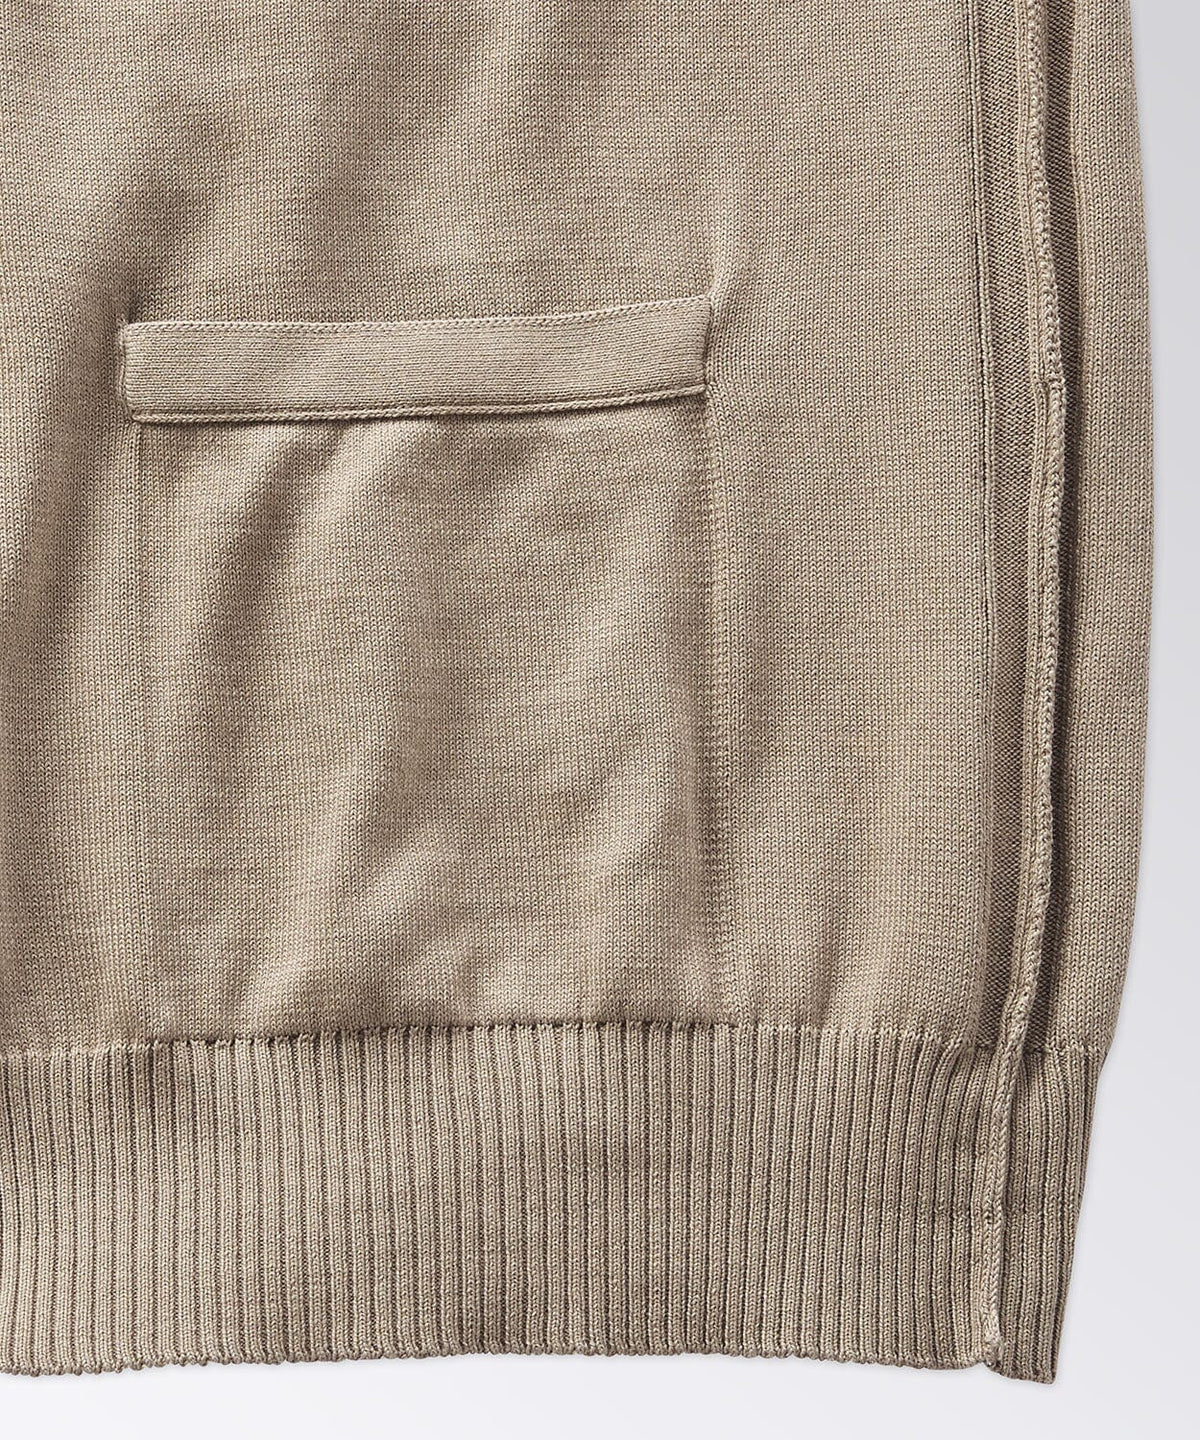 close up of a cardigan pocket